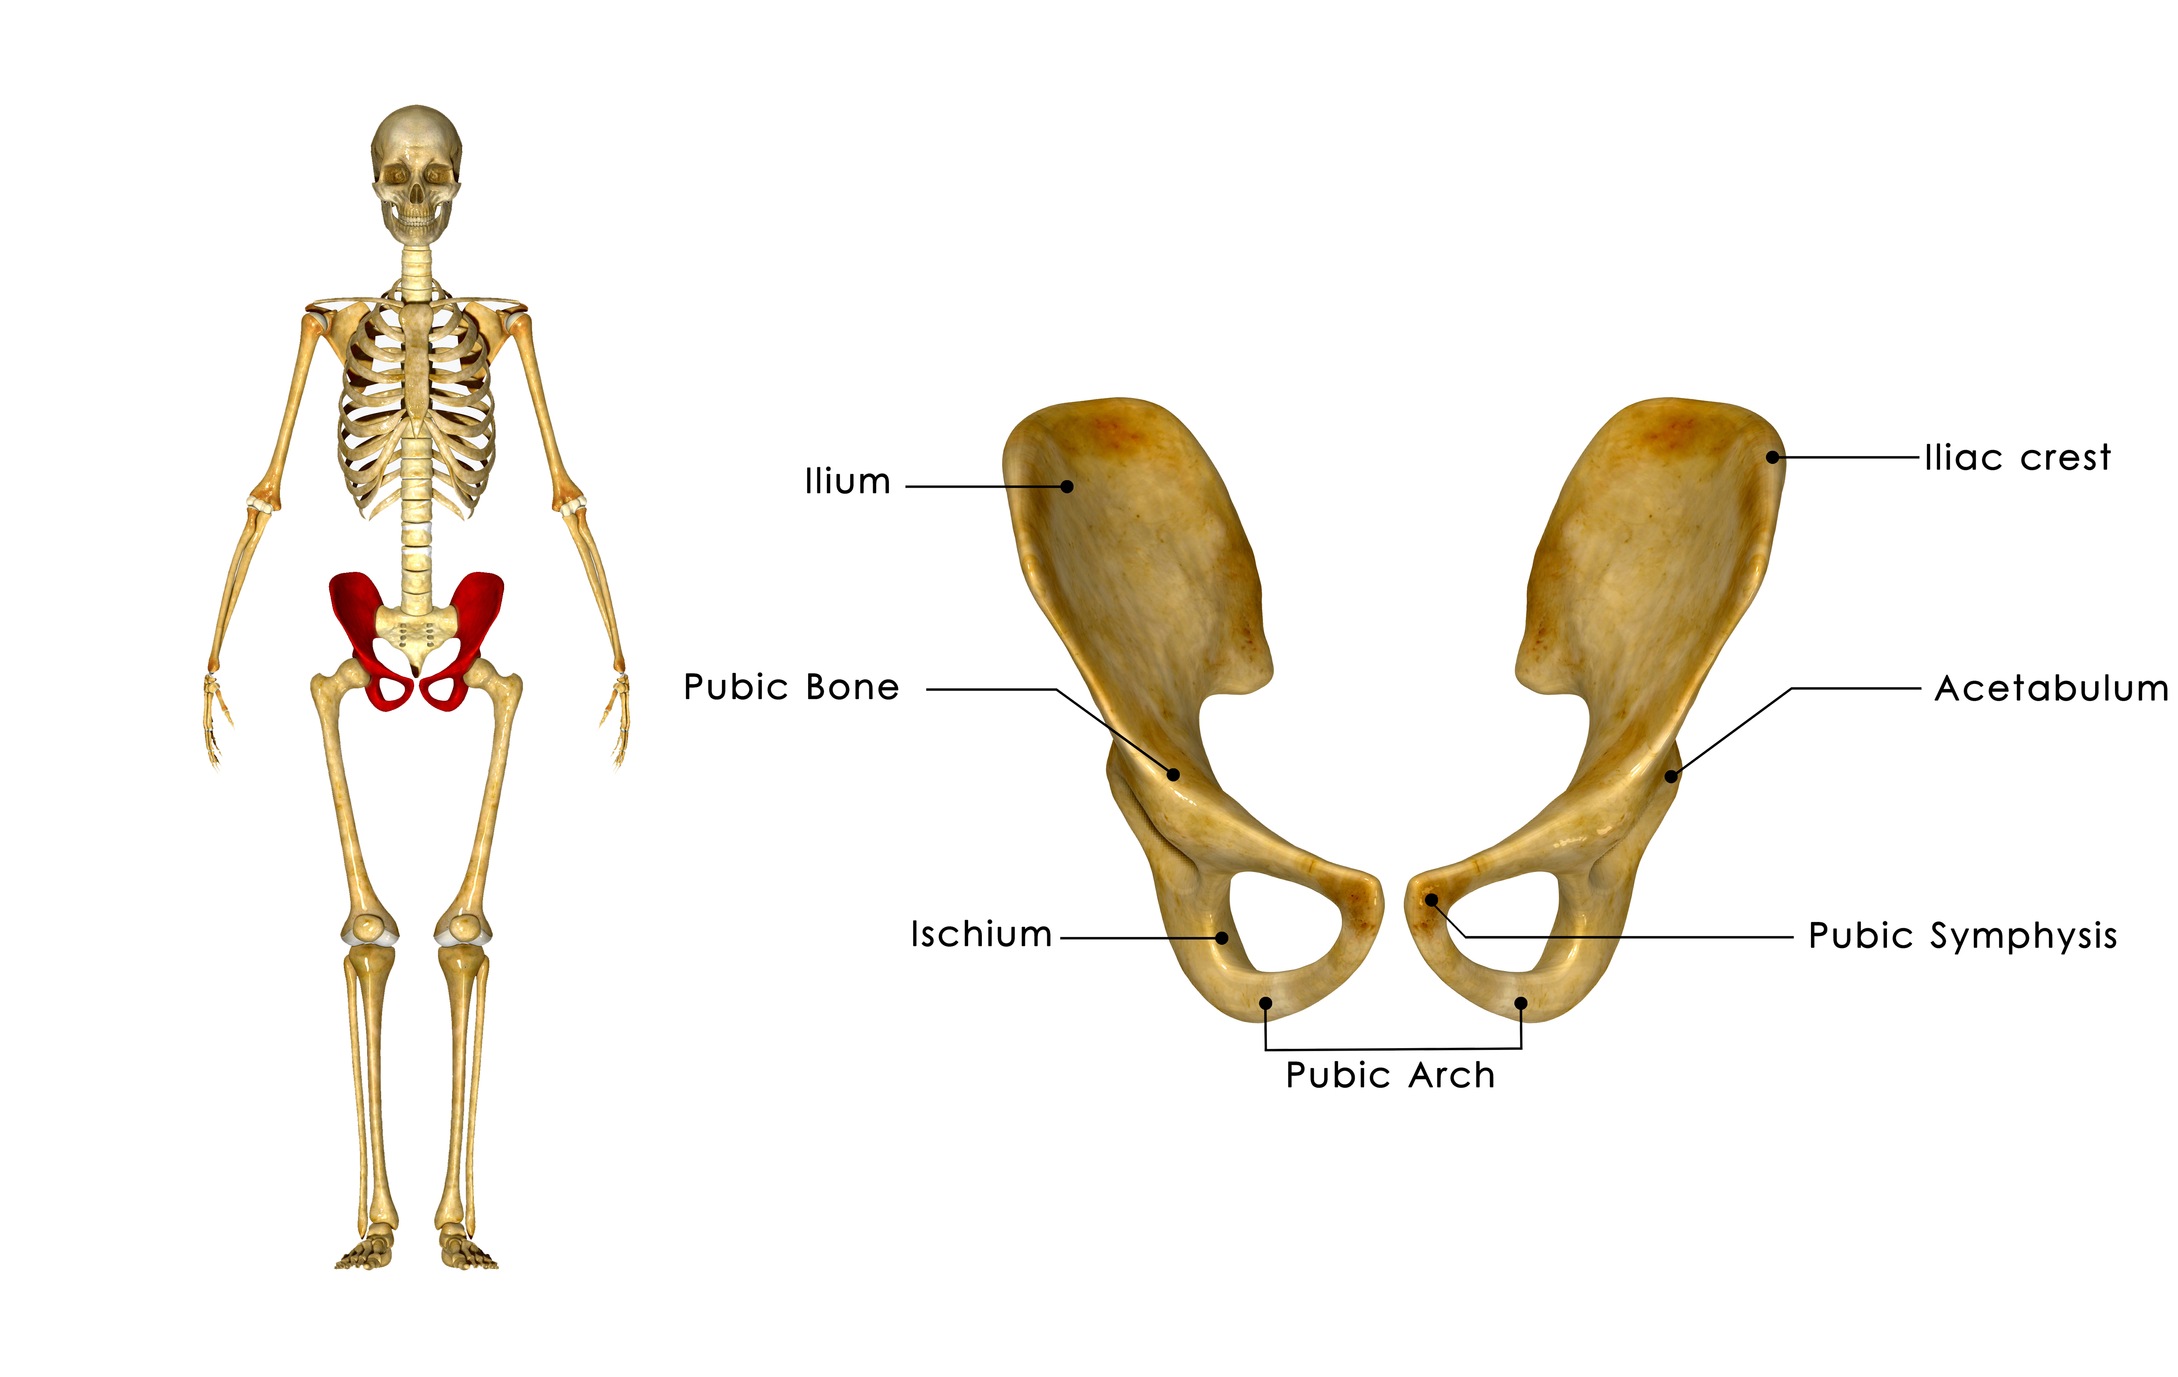 Тазовые кости скелета человека